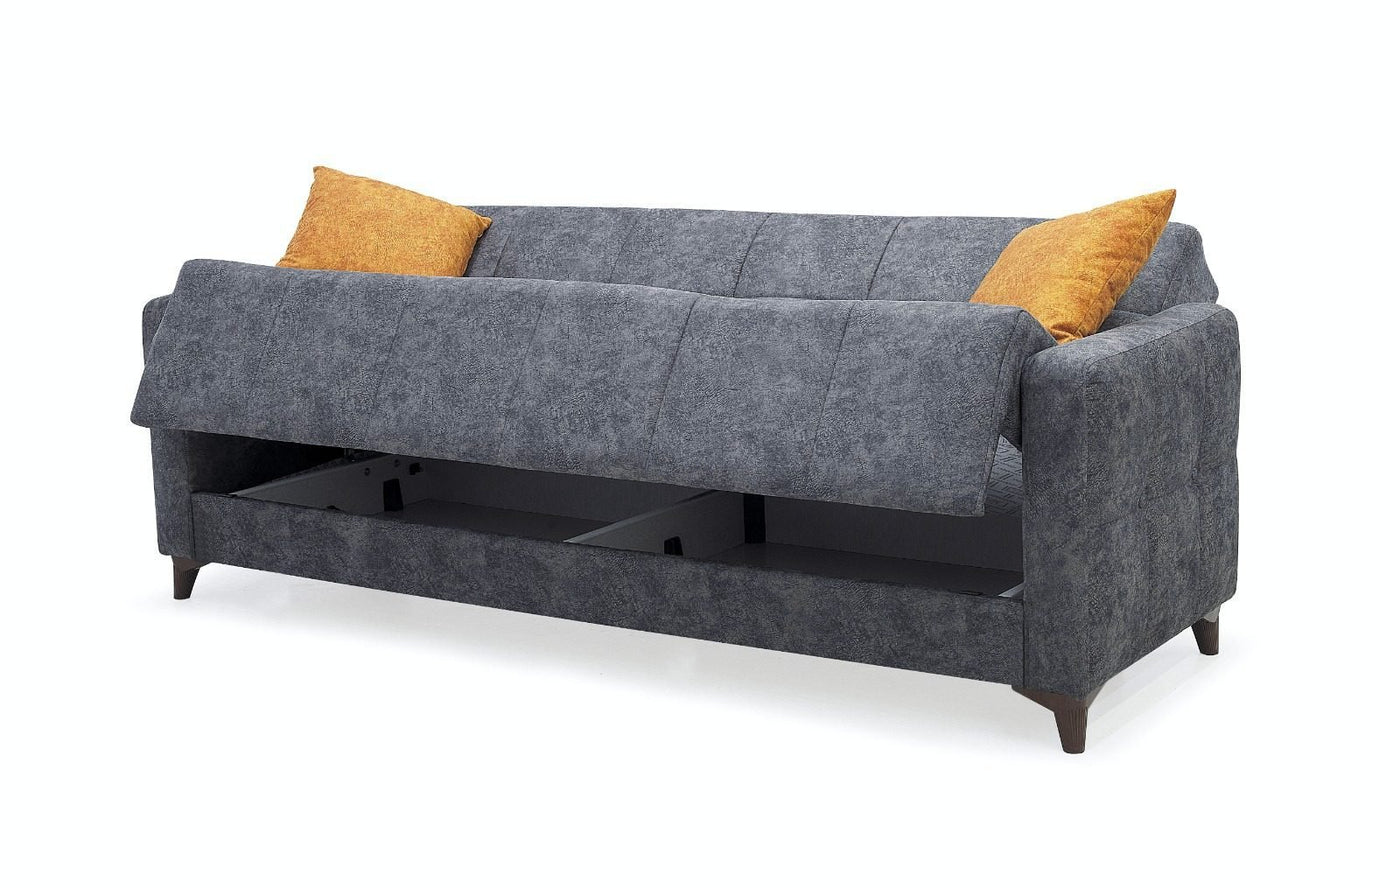 Gigi Sofa Bed Furniture - Grab Some Furniture